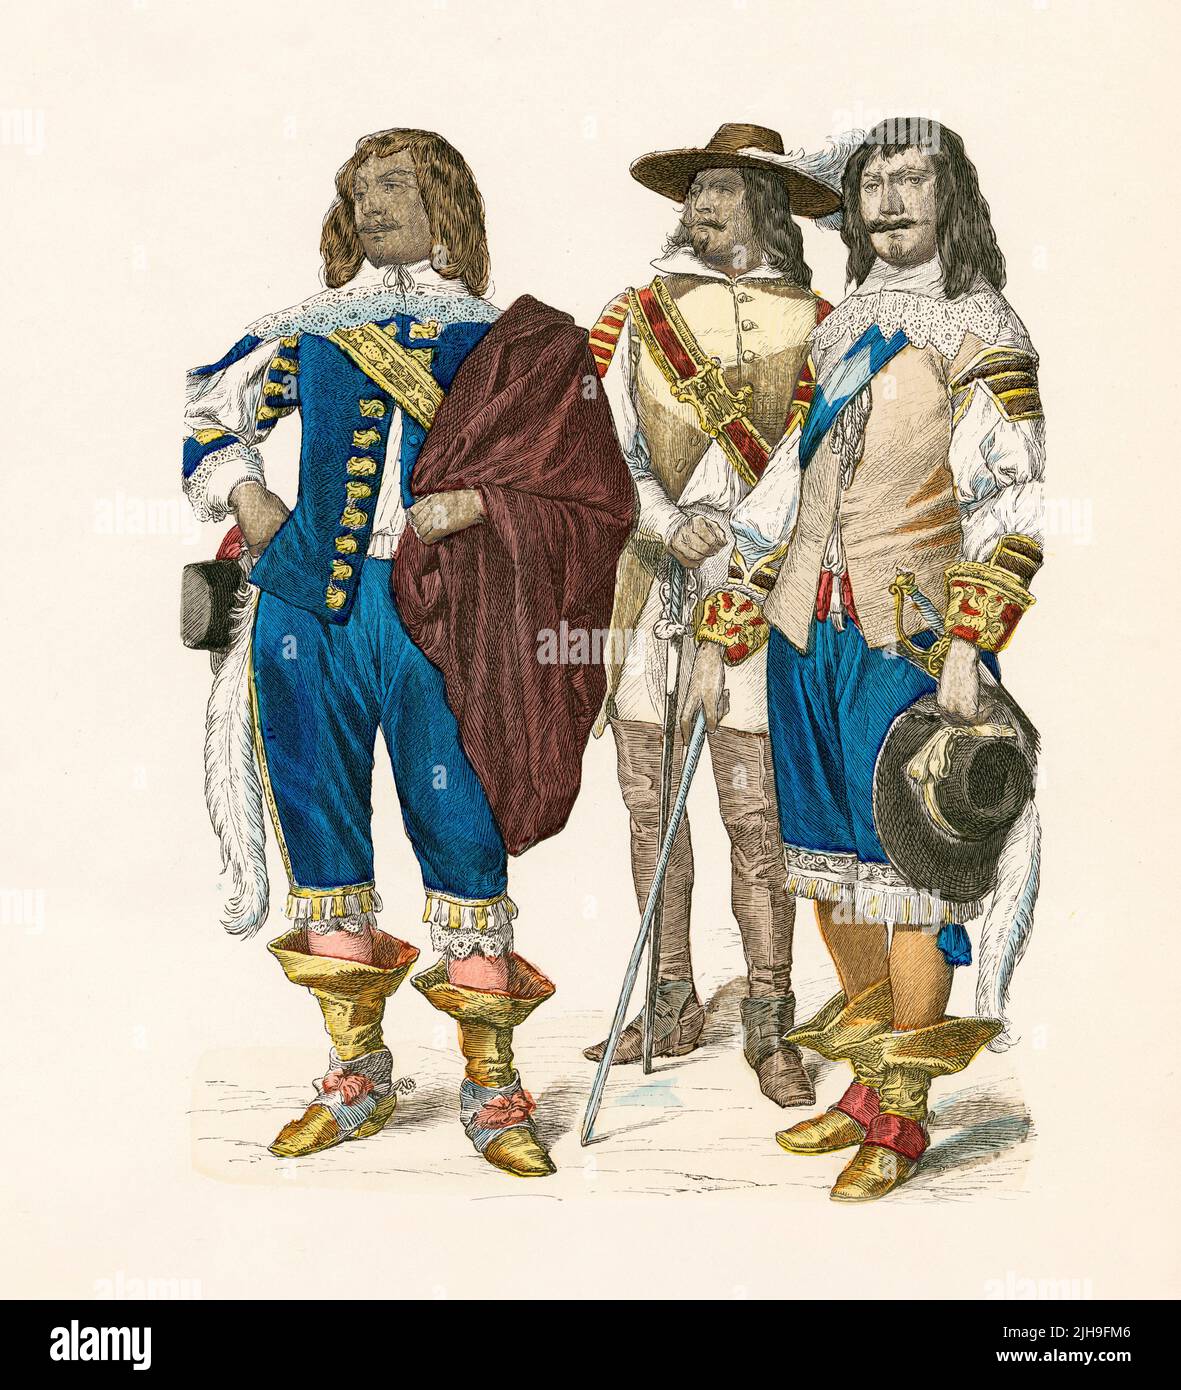 William Villiers, Viscount of Grandison (1640), Royalist Soldier (1649), Nobleman (1649), England, Illustration, The History of Costume, Braun & Schneider, Munich, Germany, 1861-1880 Stock Photo